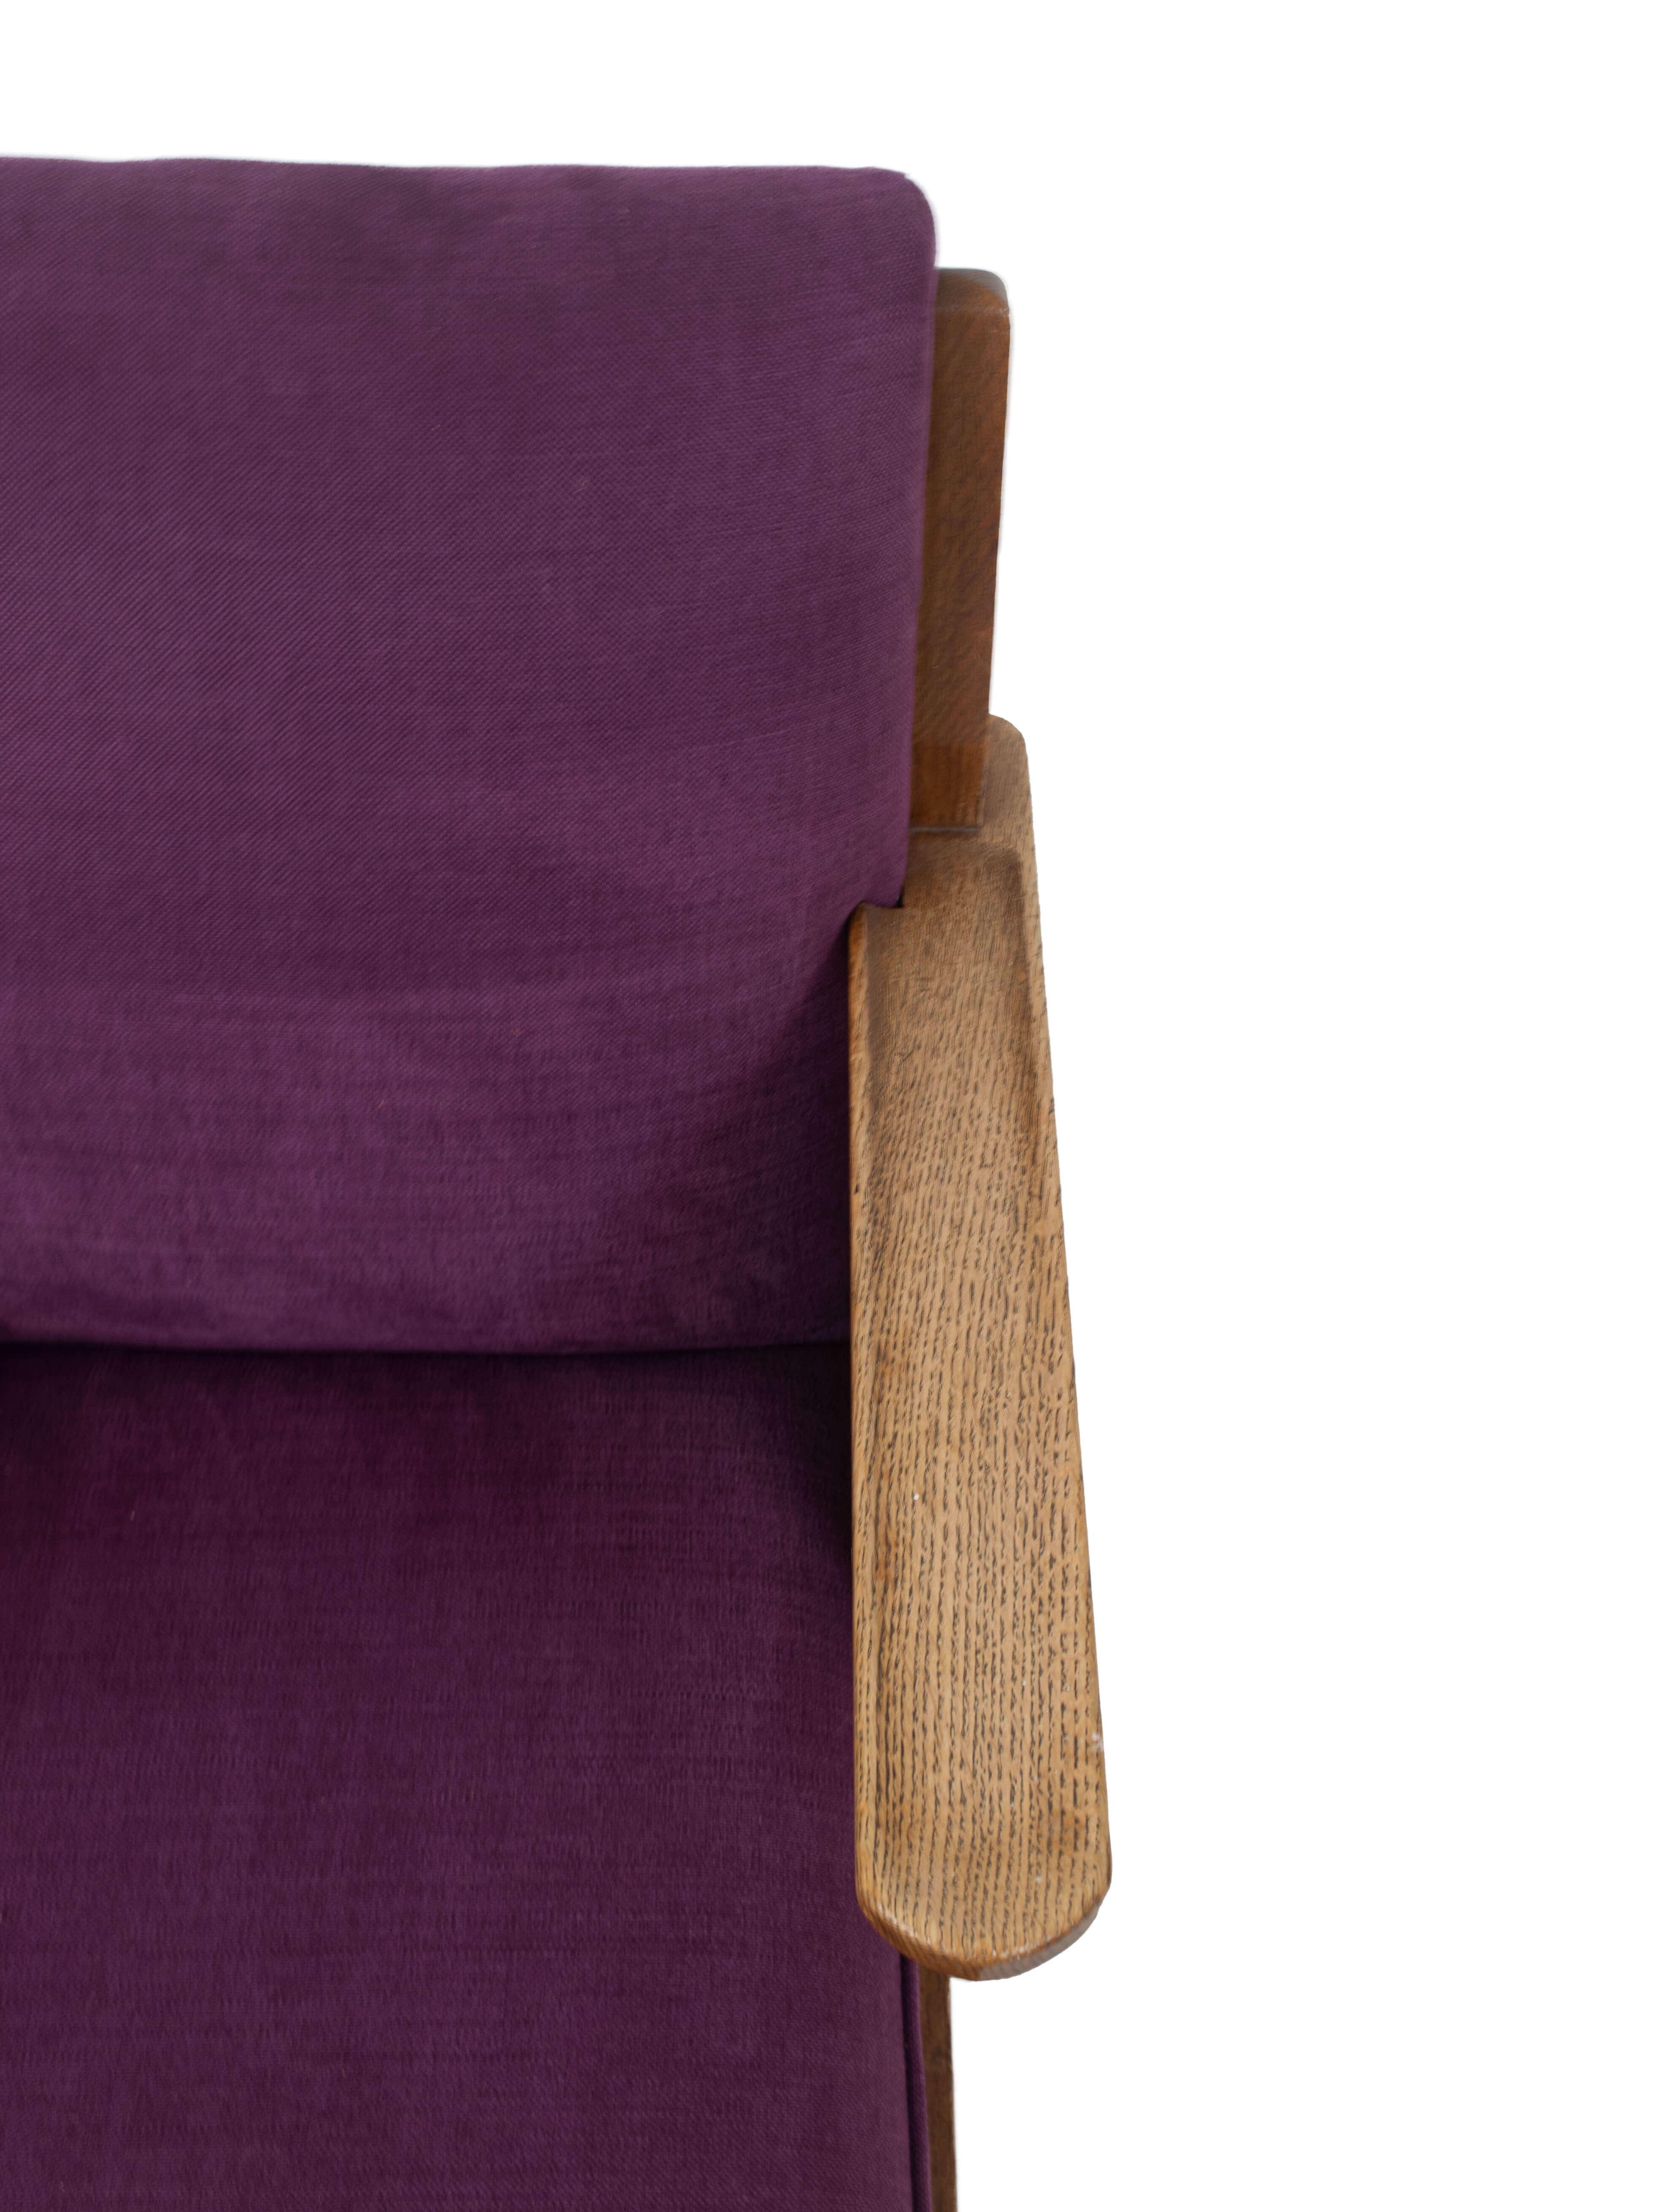 Amsterdam School Armchair in Purple Fabric, The Netherlands 1930s 3